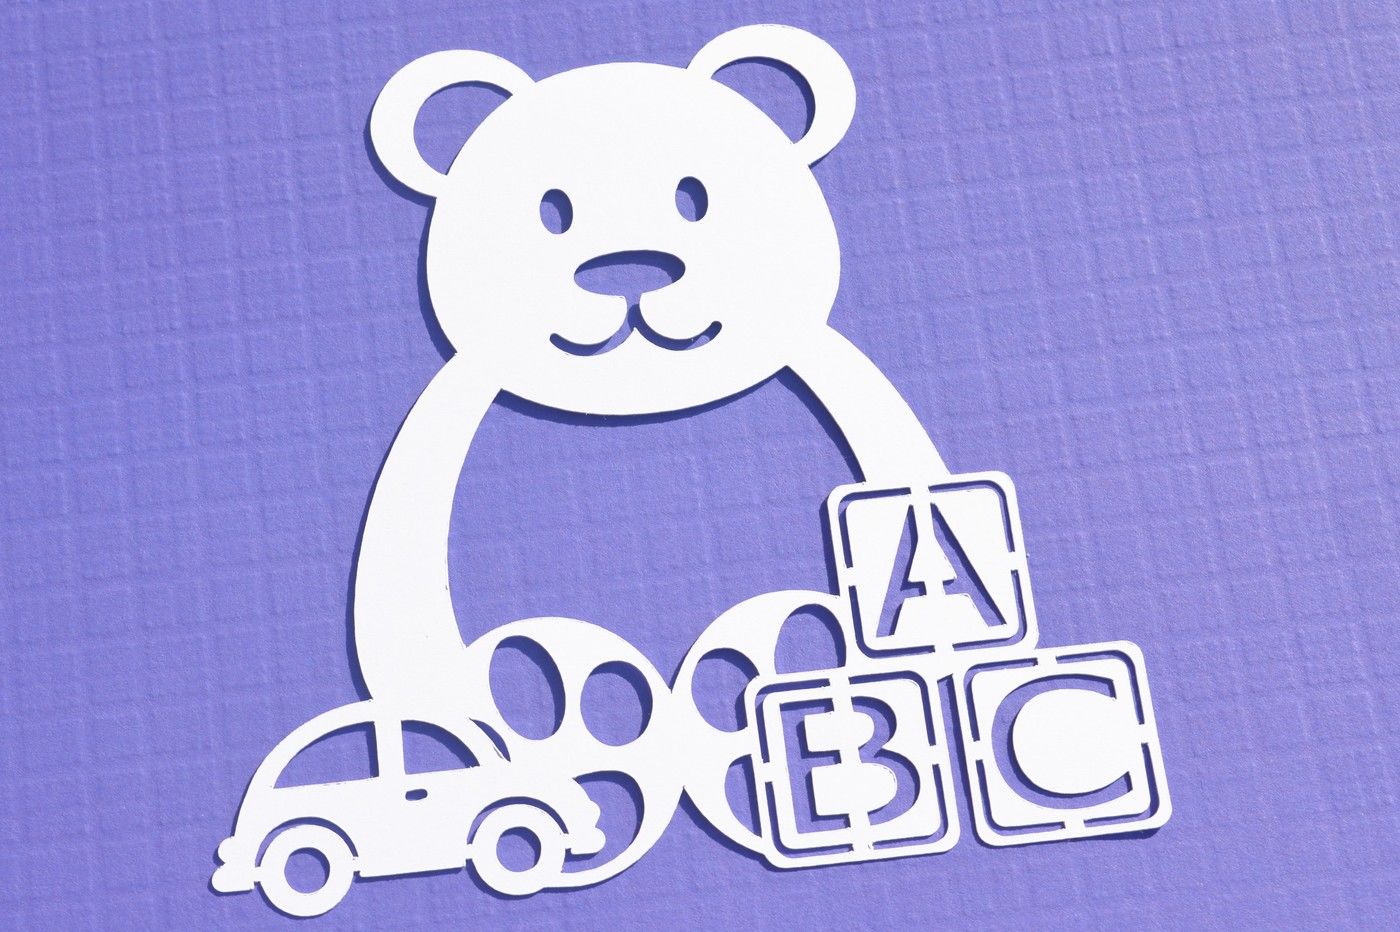 Download Teddy Bear Paper Cut SVG / DXF / EPS Files By Digital Gems | TheHungryJPEG.com